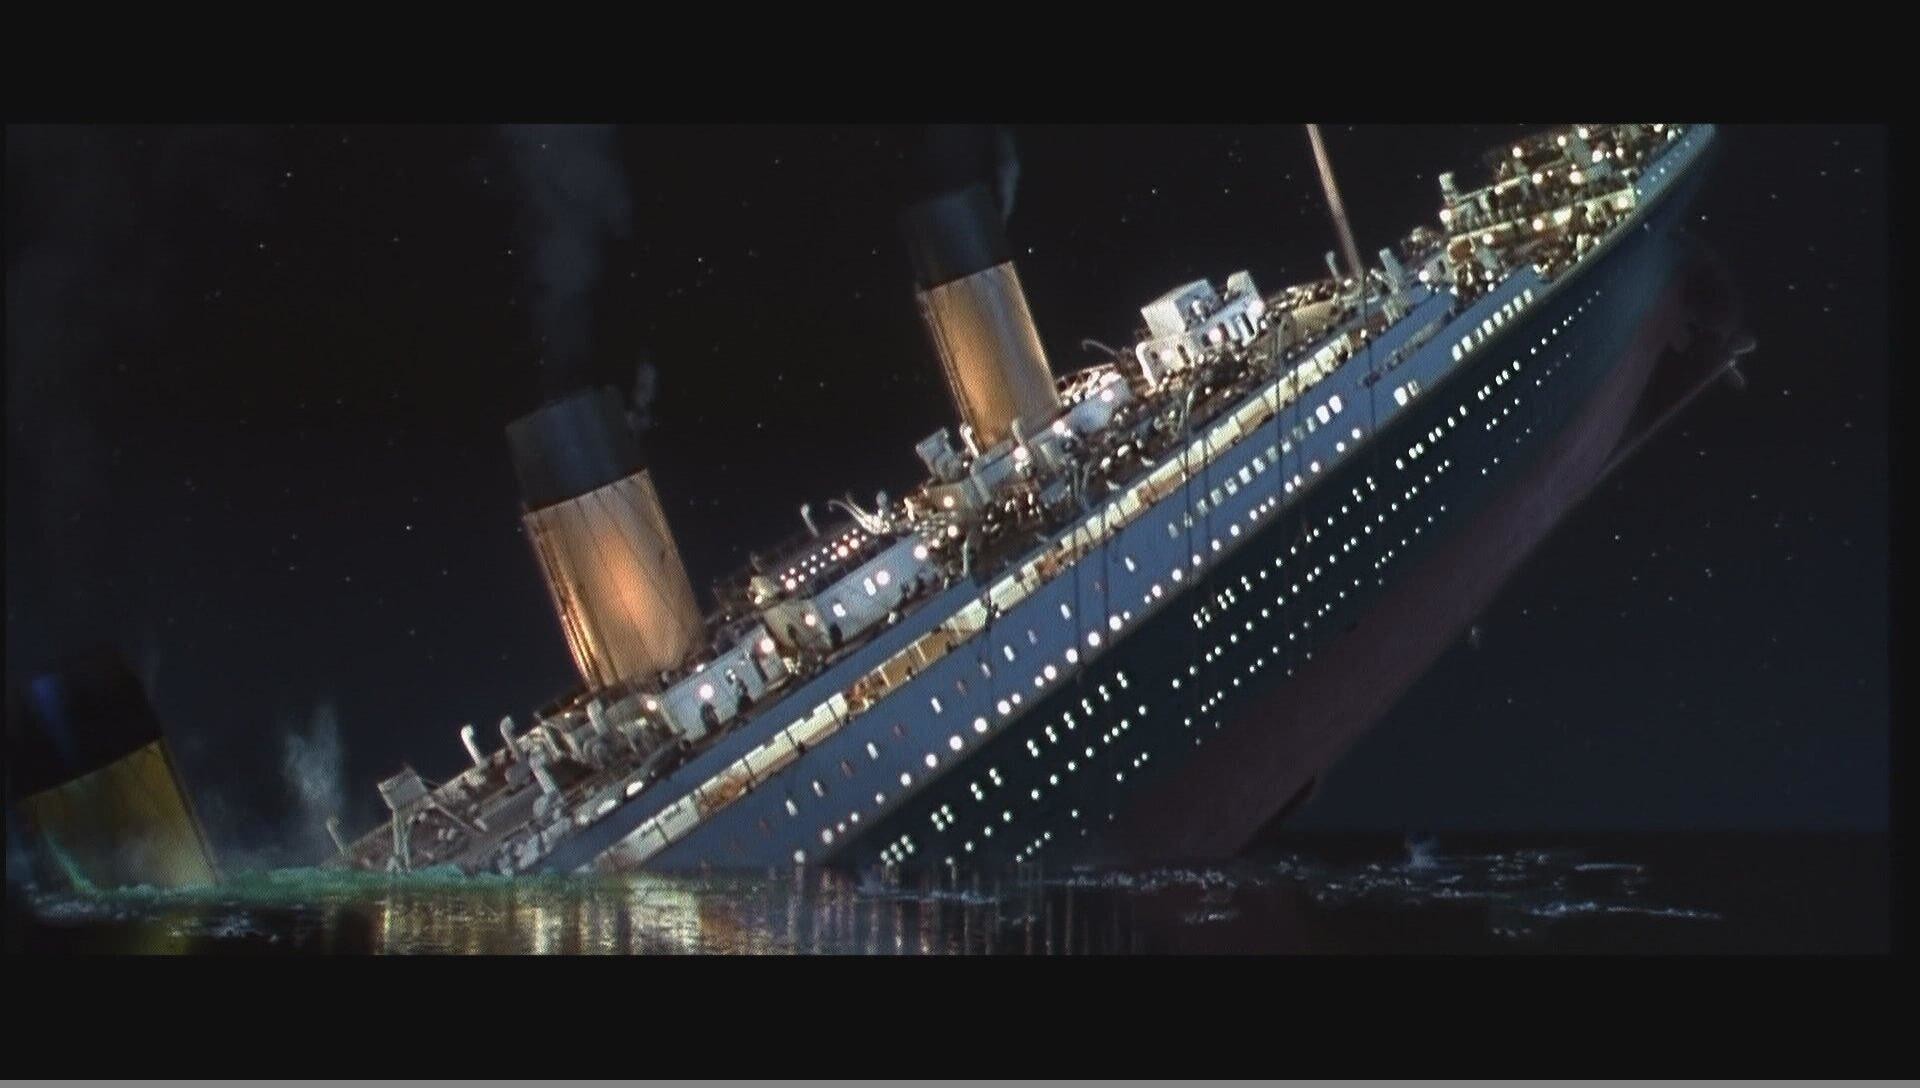 Titanic Sinking Wallpaper 59 Images